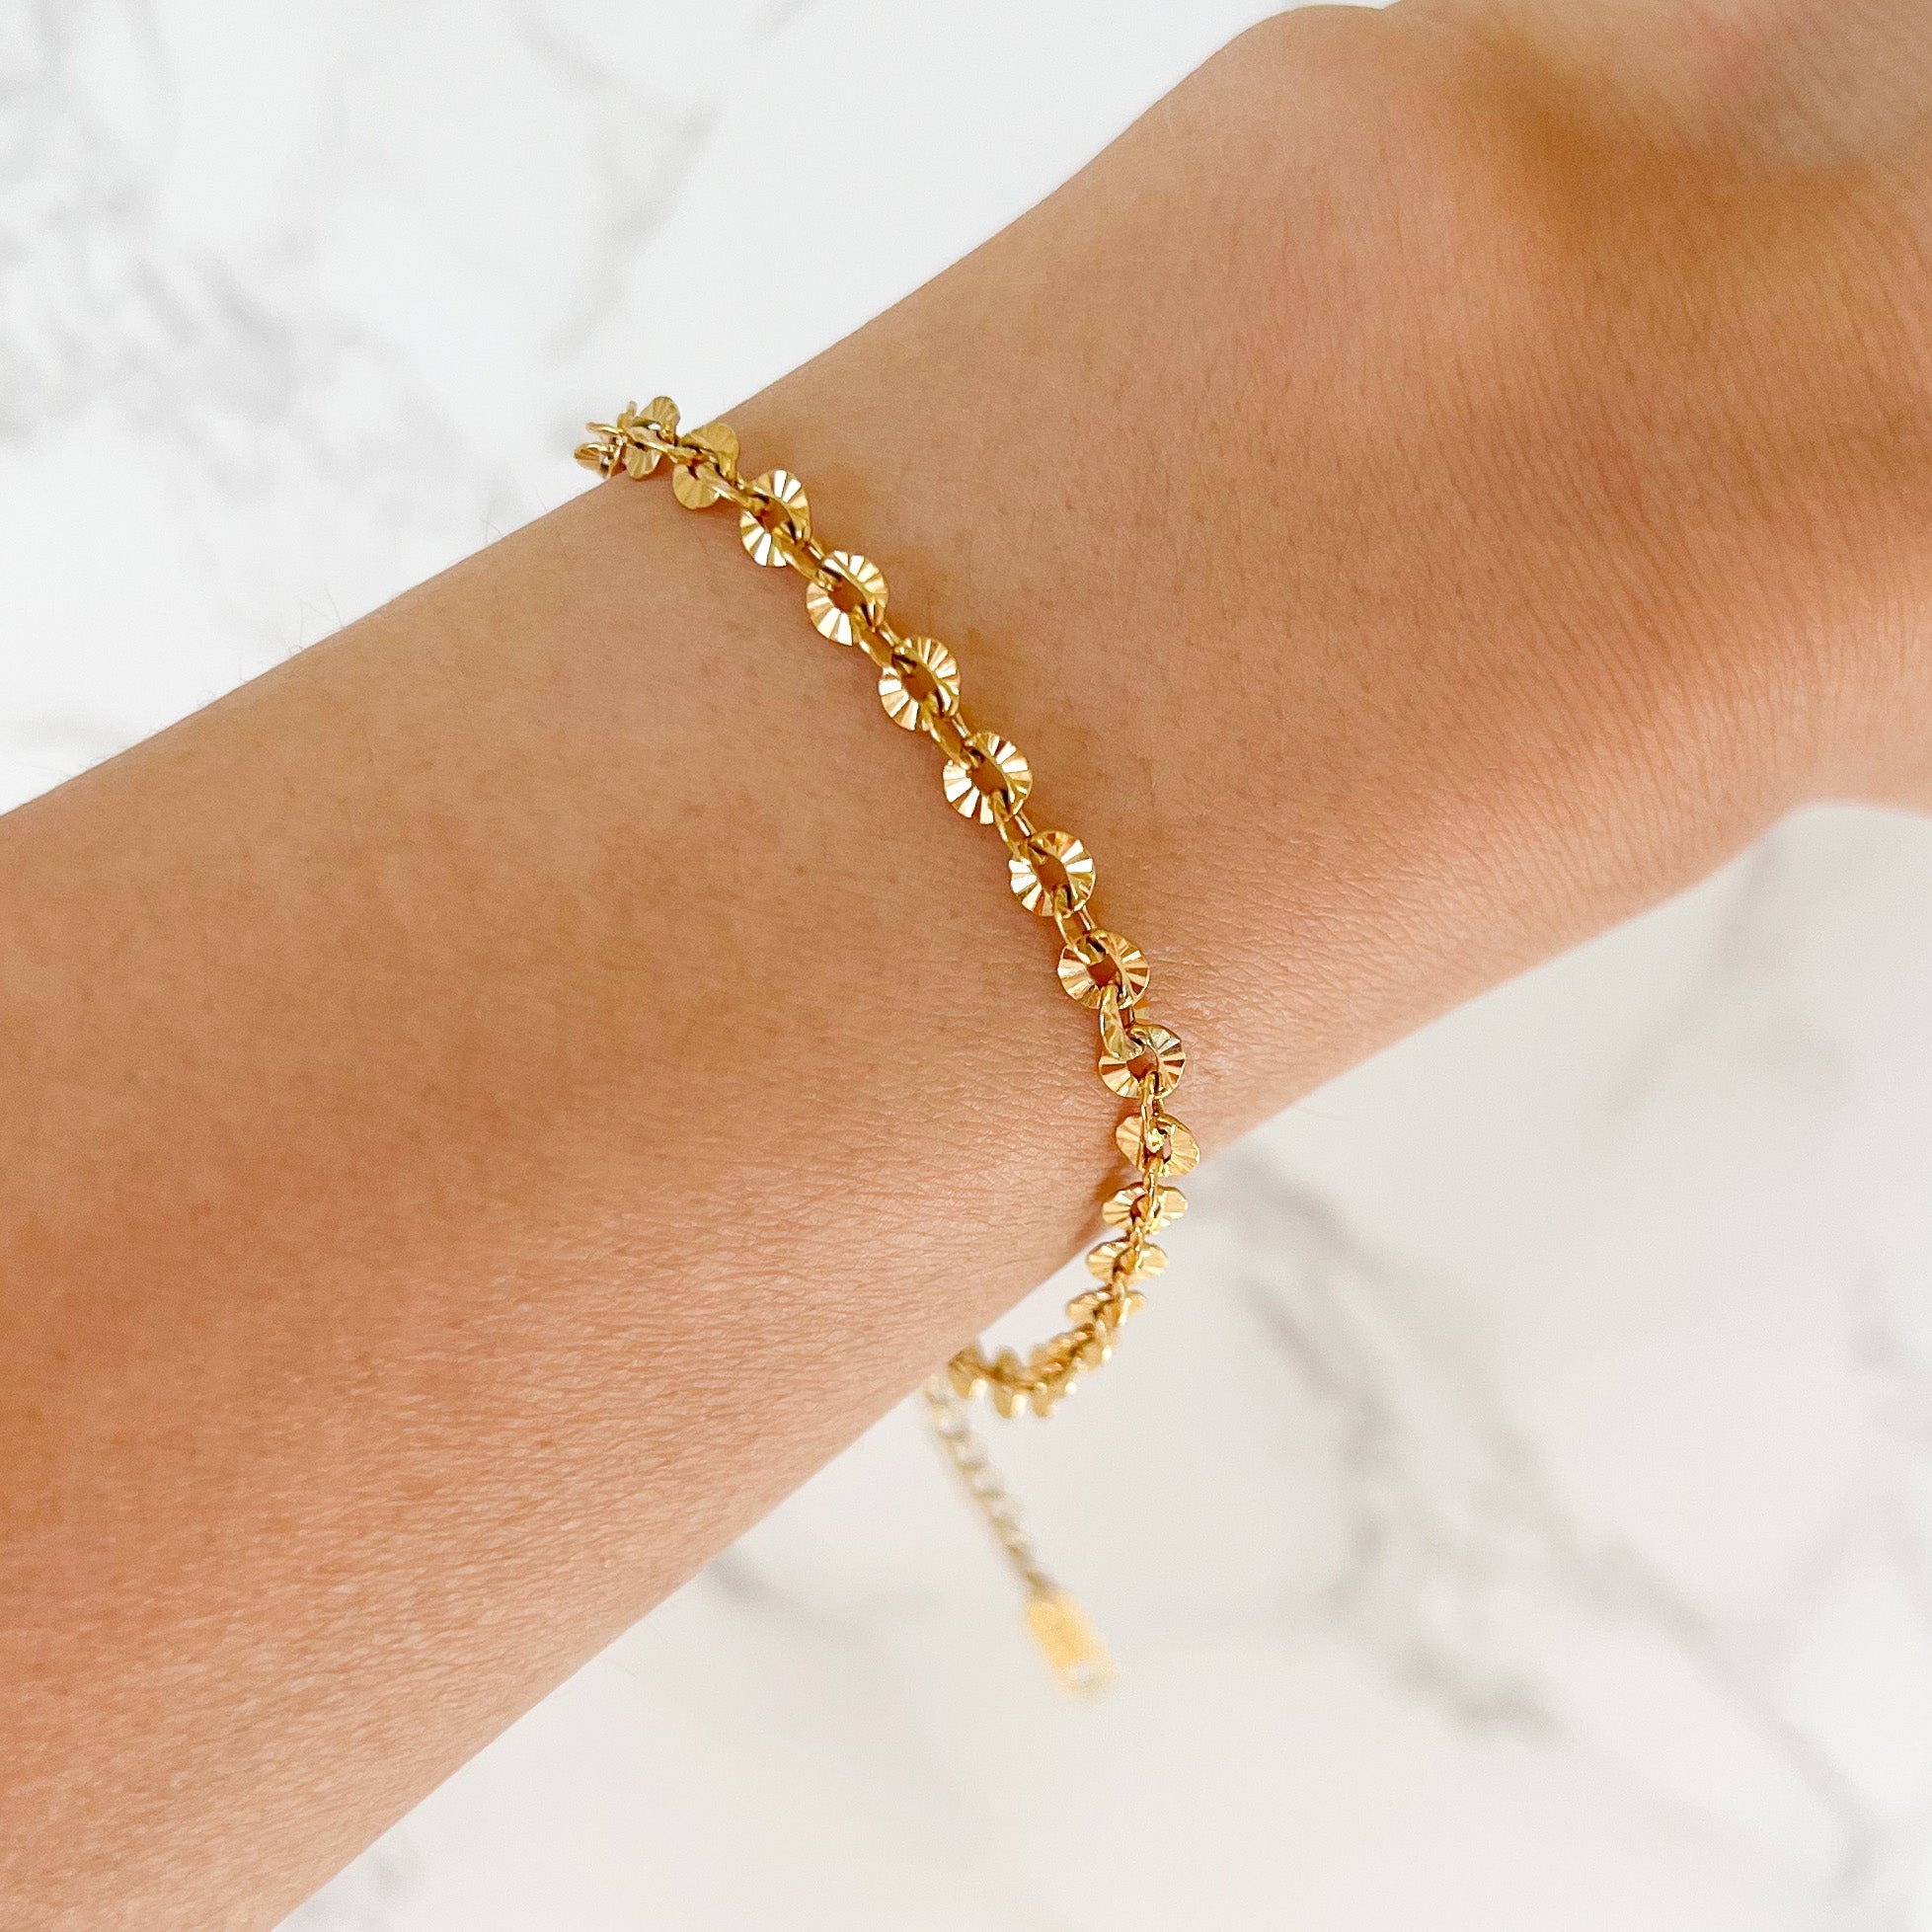 Hollow Sunburst Bracelet in Gold - Flaire & Co.